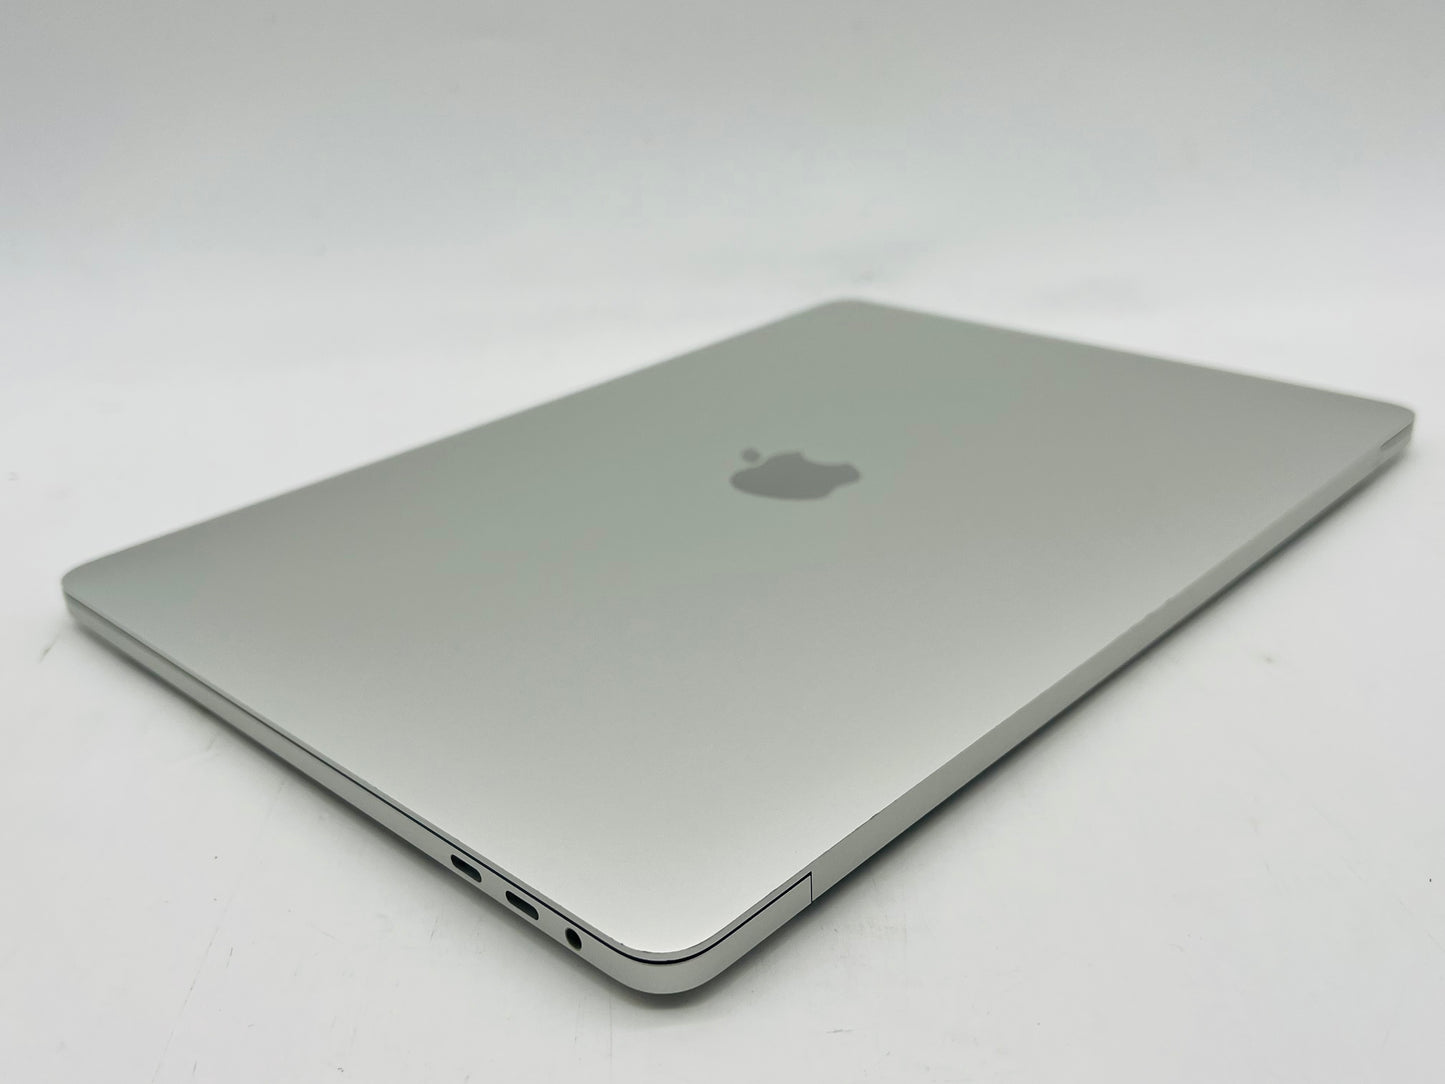 Apple 2019 MacBook Pro 13 in TB 2.4GHz i5 16GB RAM 512GB SSD IIPG655 - Excellent